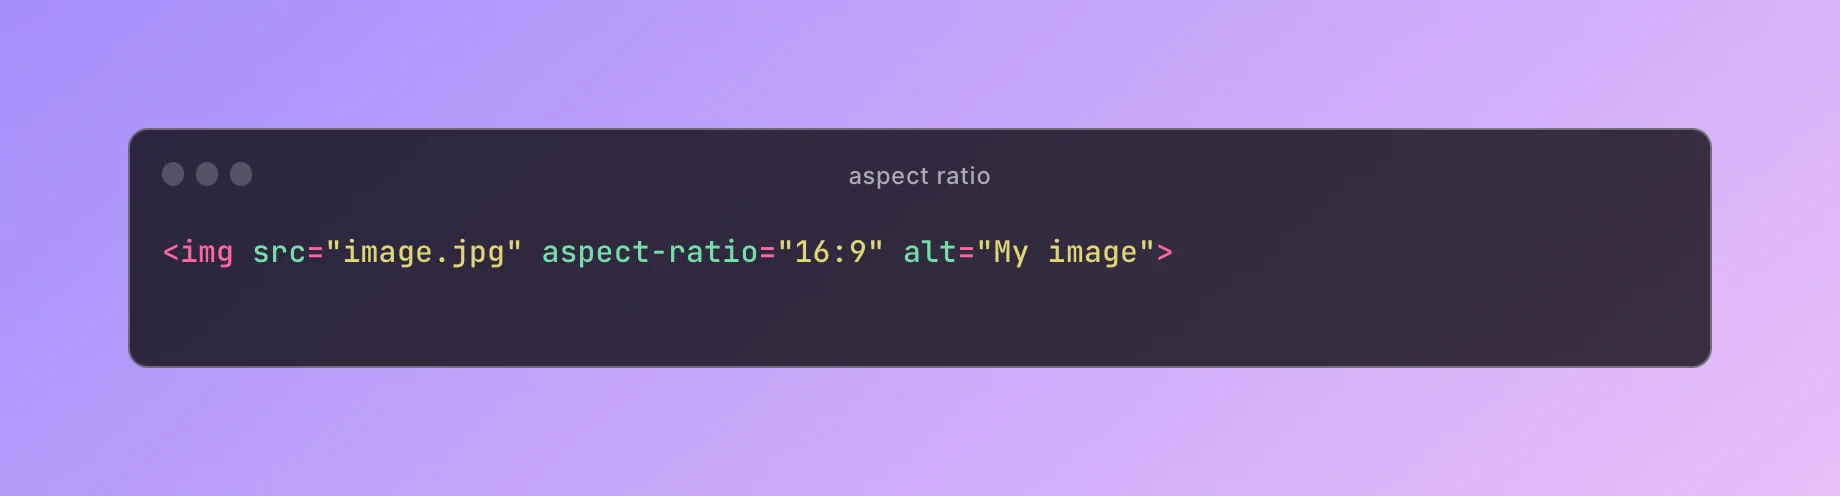 Optimizing images with aspect-ratio